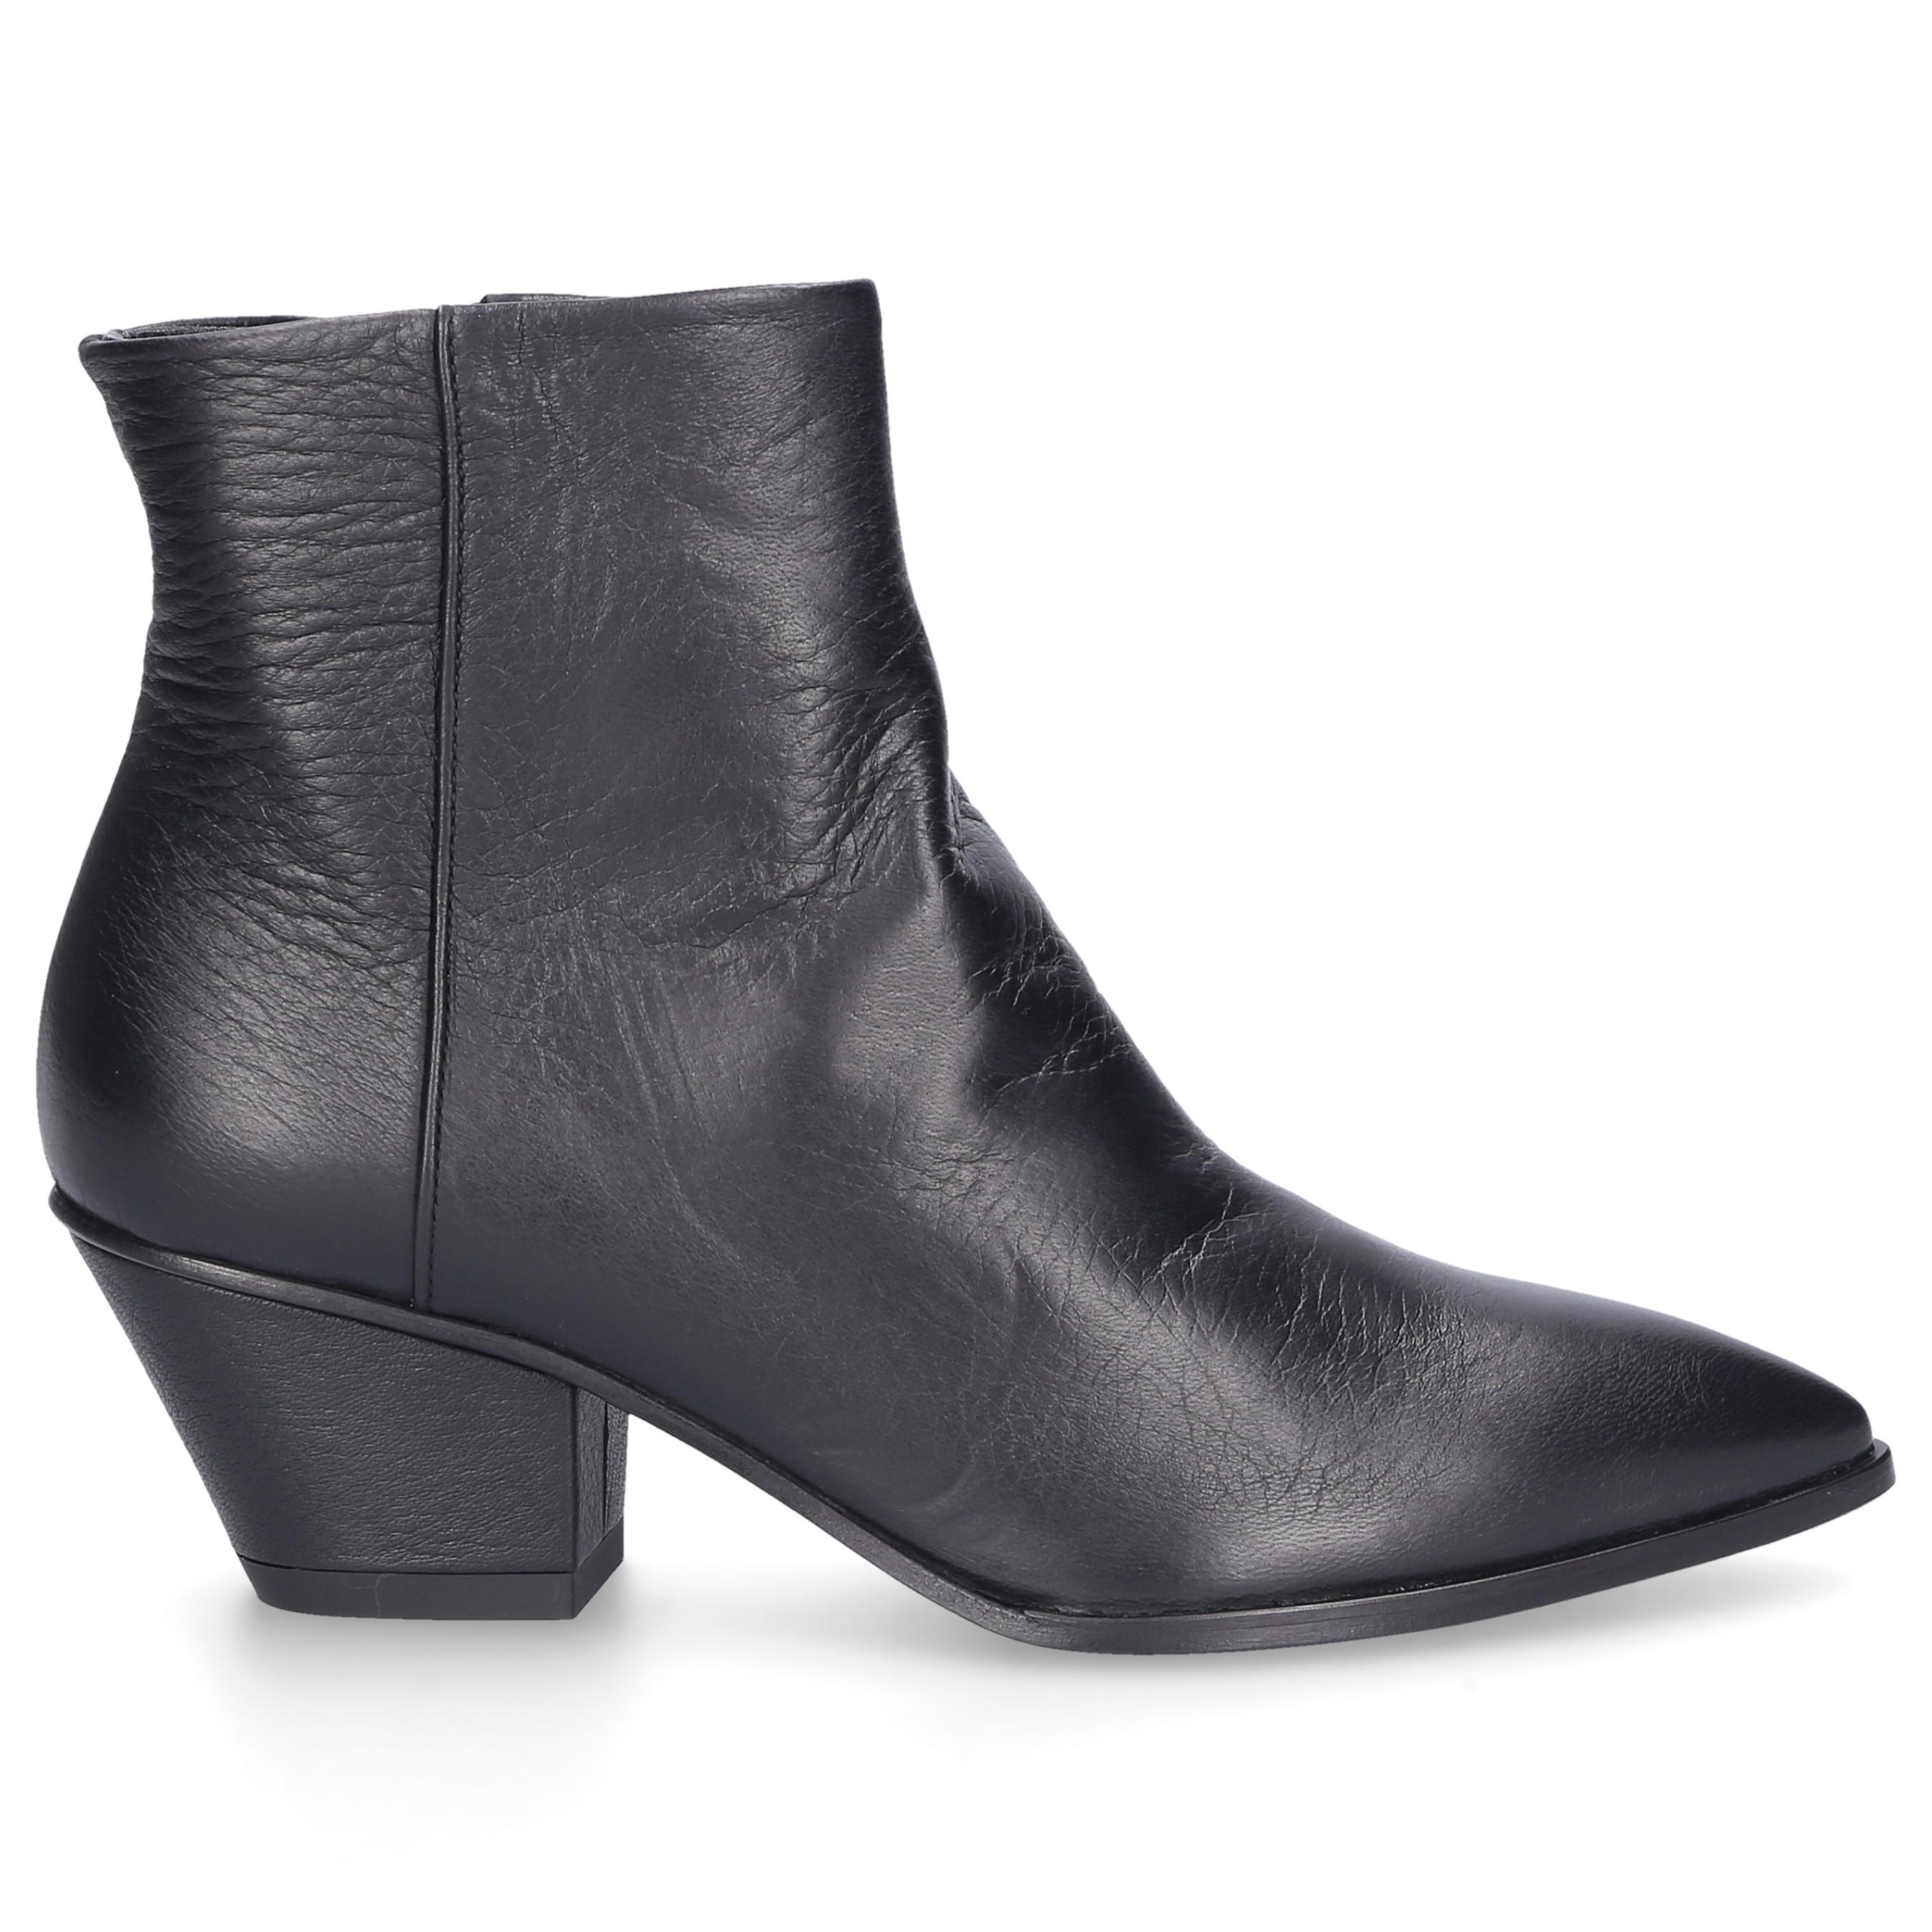 Agl Attilio Giusti Leombruni Leather Ankle Boots Black D137556 - Lyst